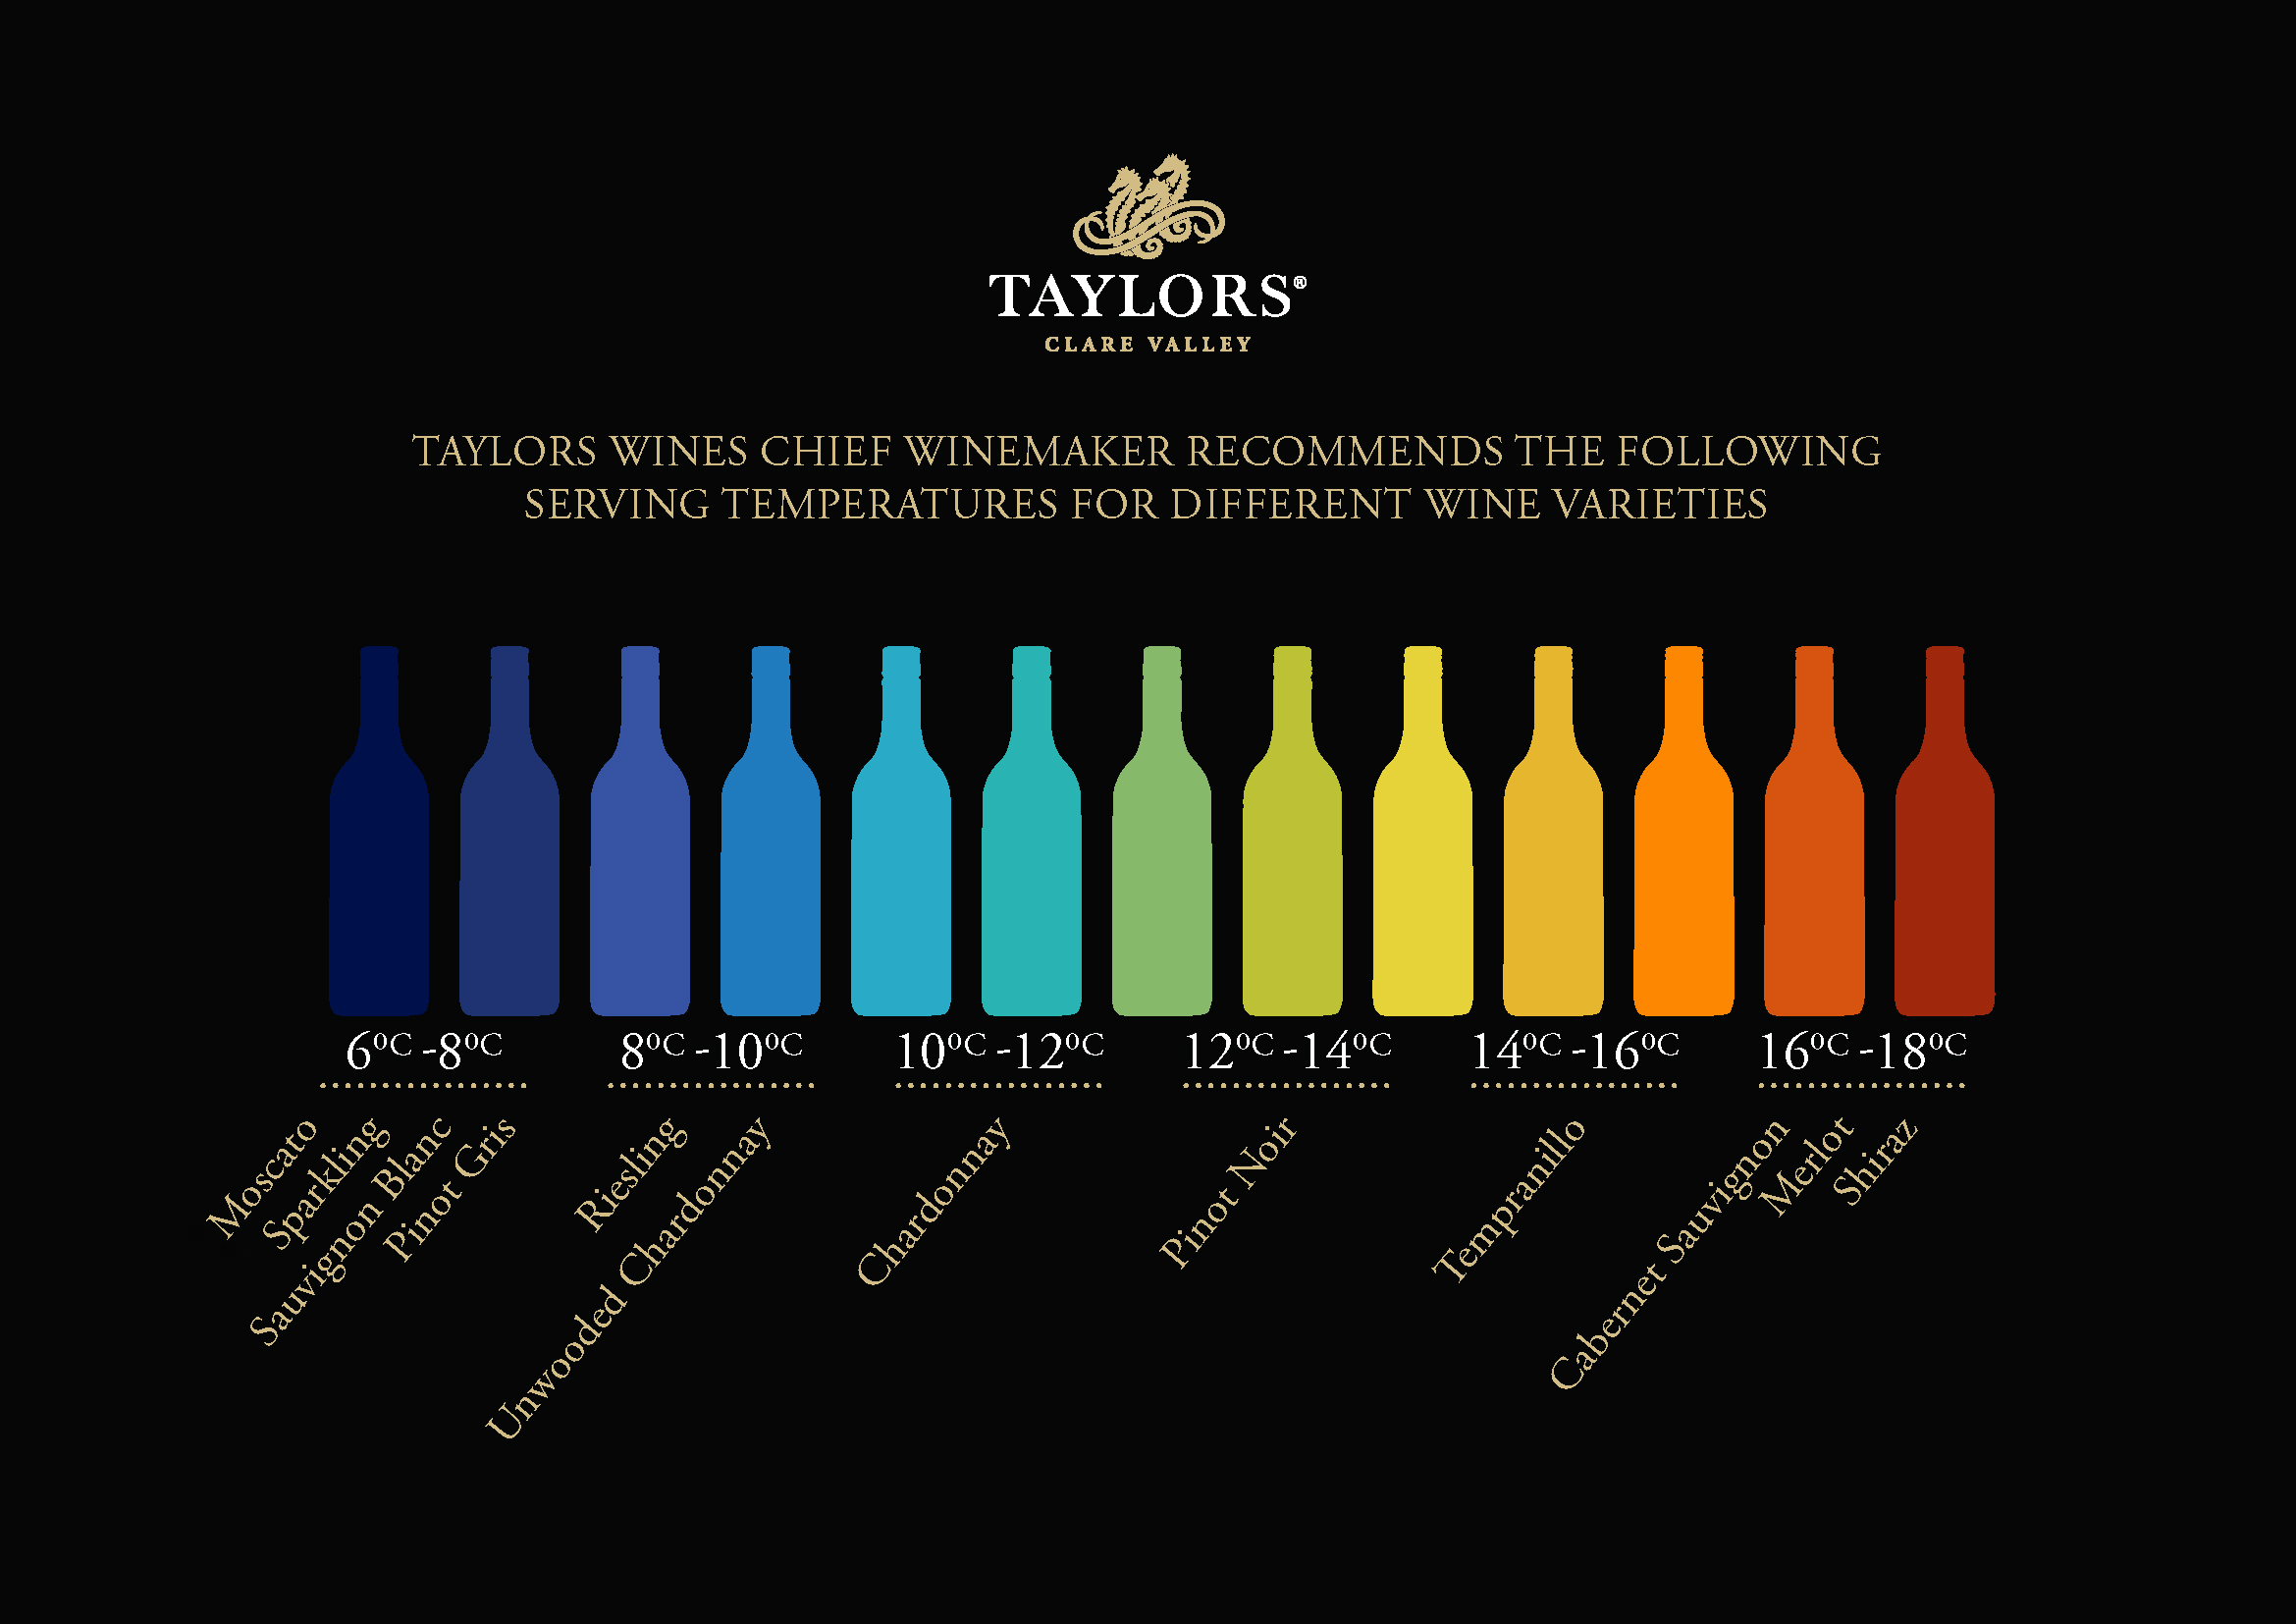 red wine, shiraz, pinot noir, cabernet sauvignon, Taylors, Taylors Wines, Australian wine